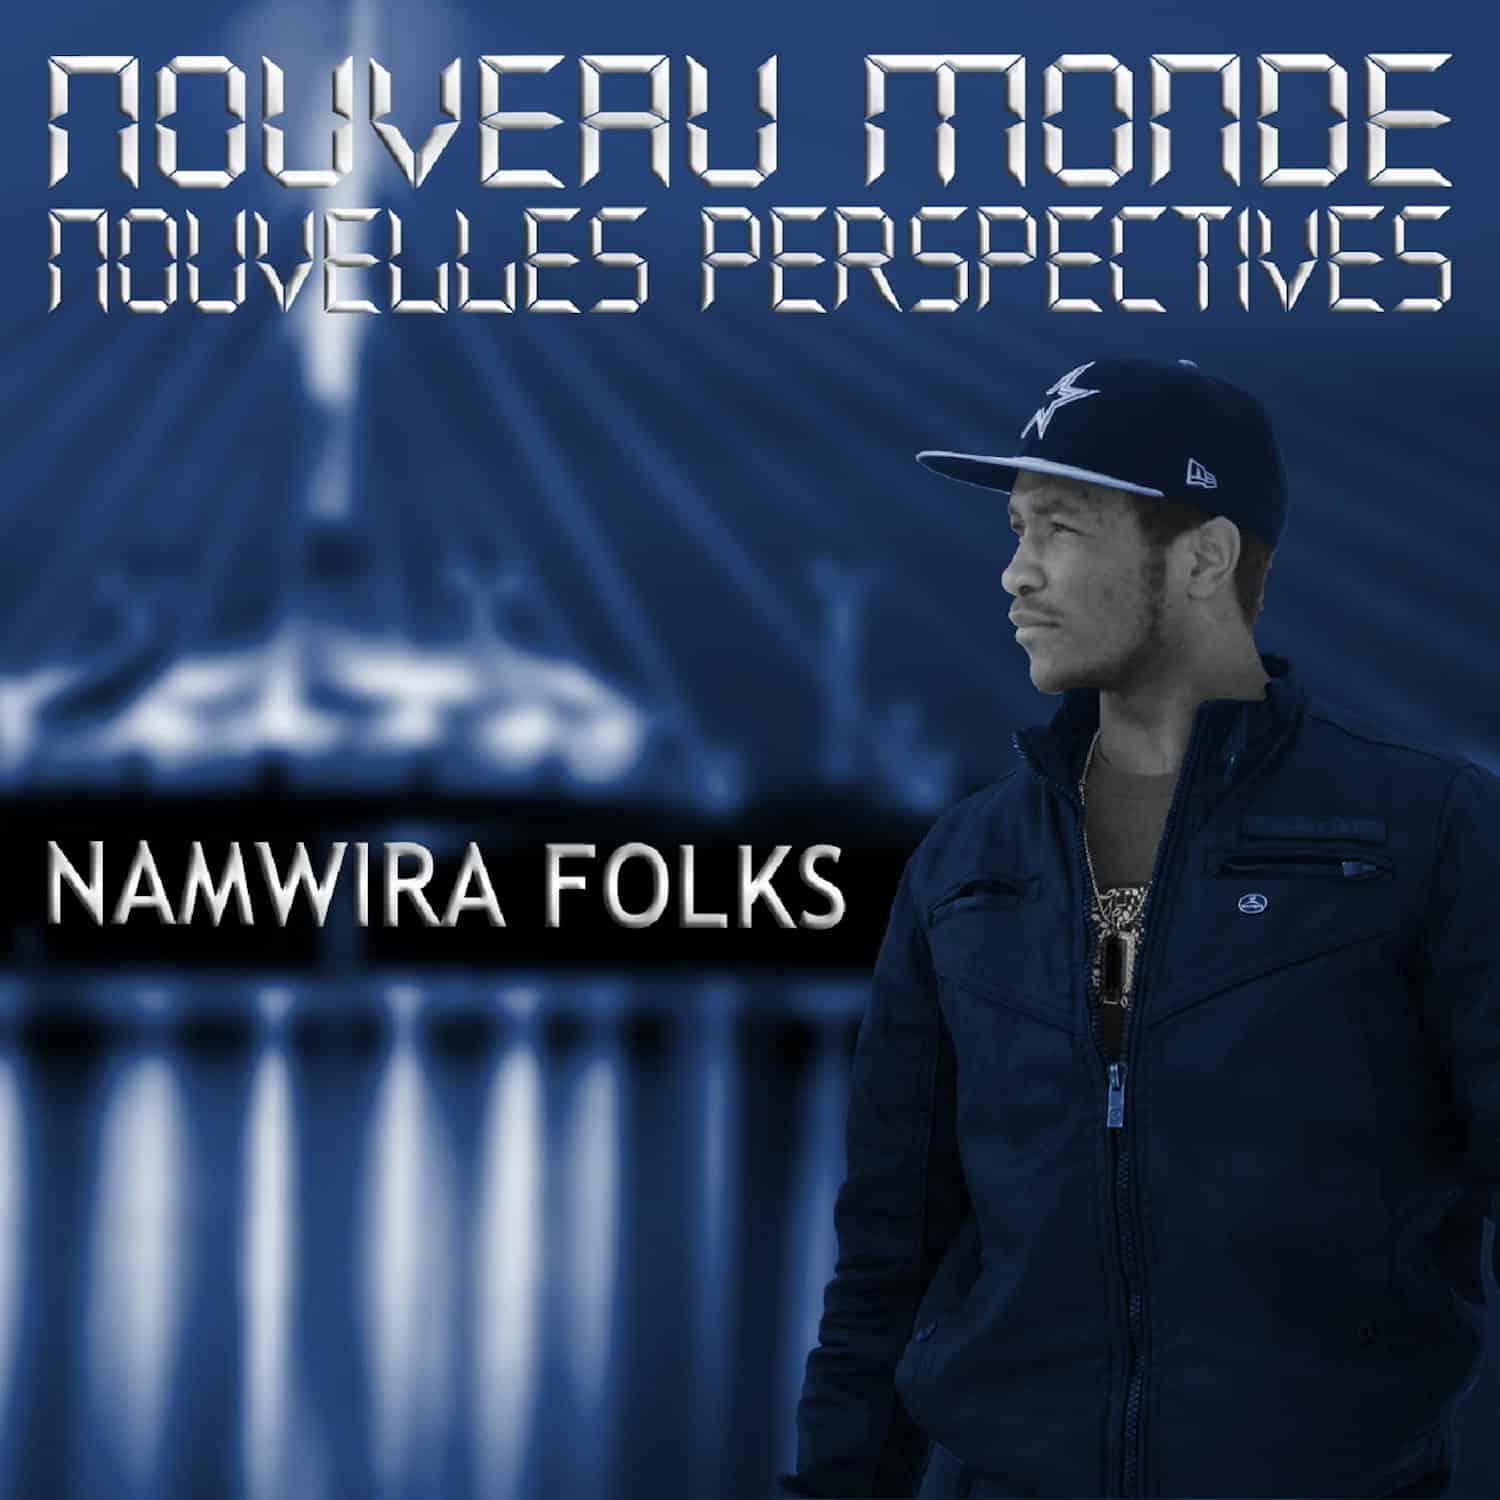 Namwira Folks – Nouveau Monde , Nouvelles Perspectives